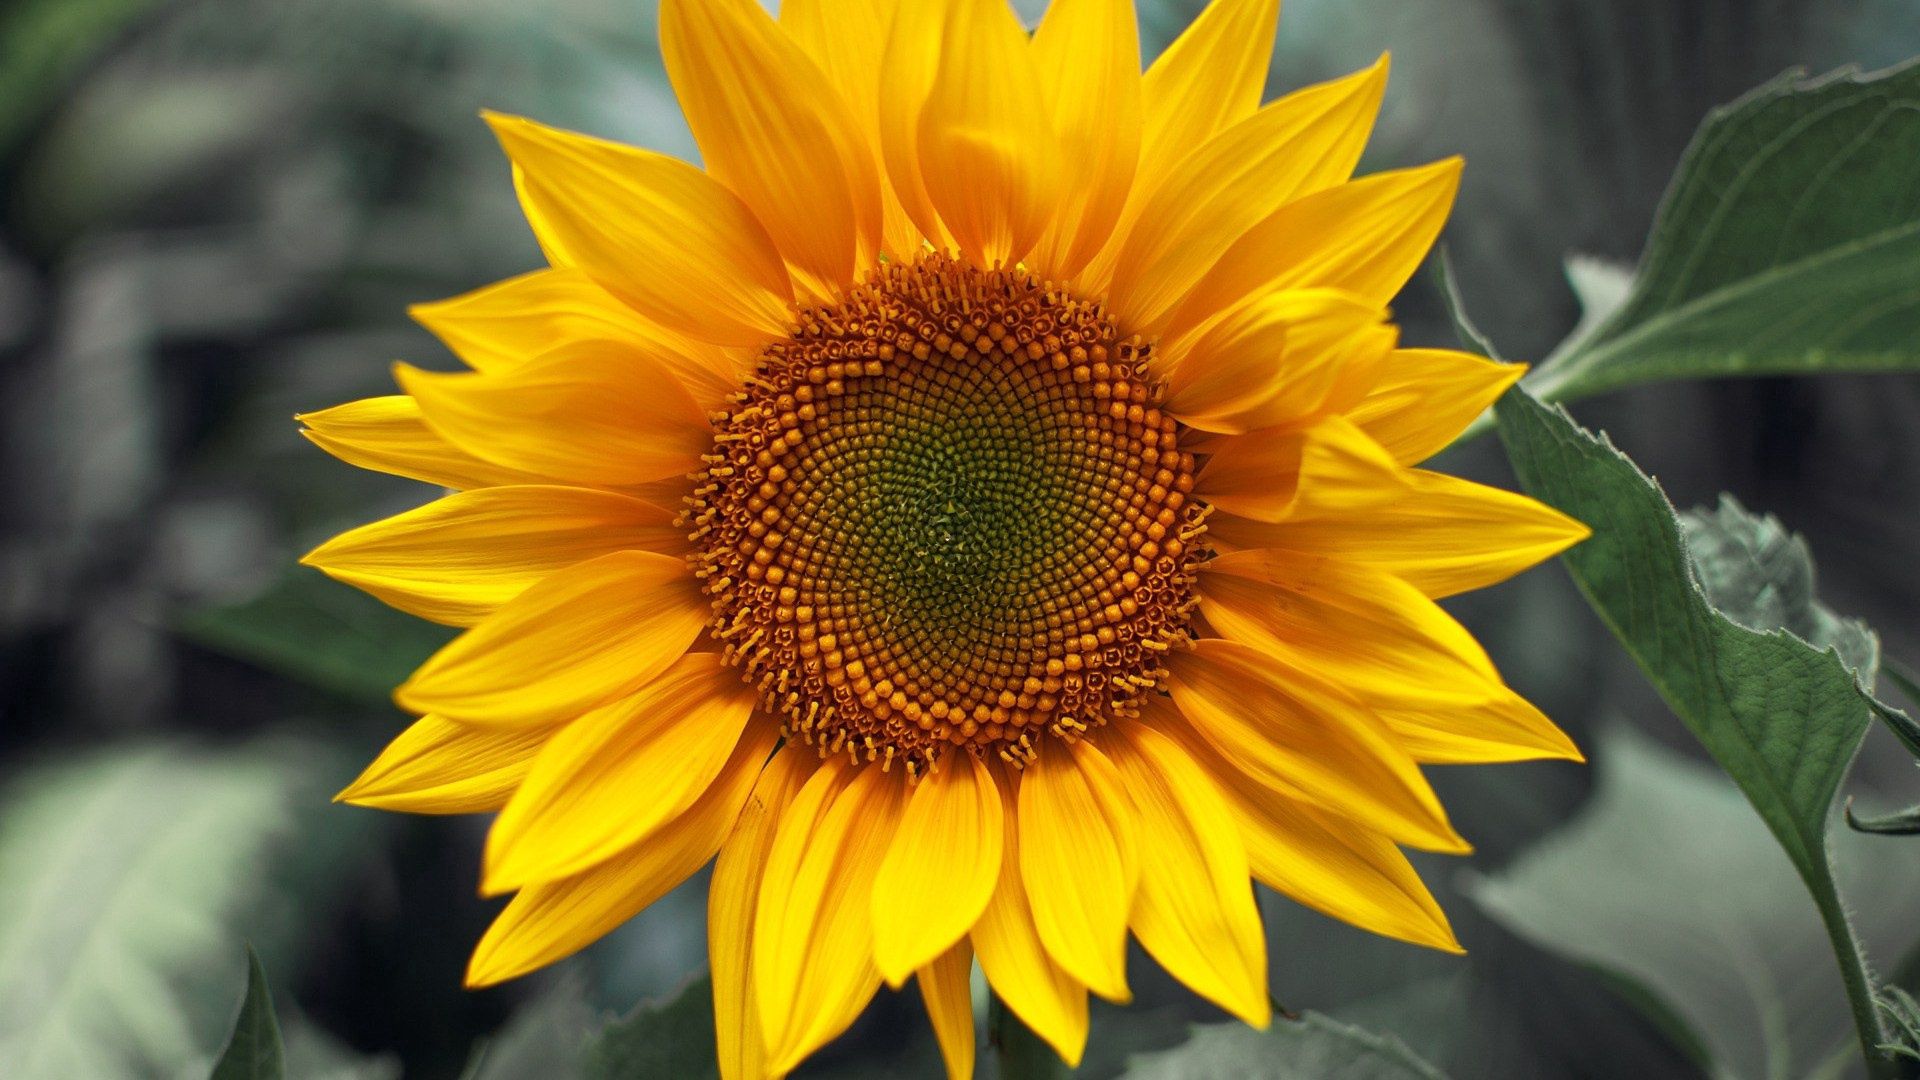 Popular Sunflower Image for Phone